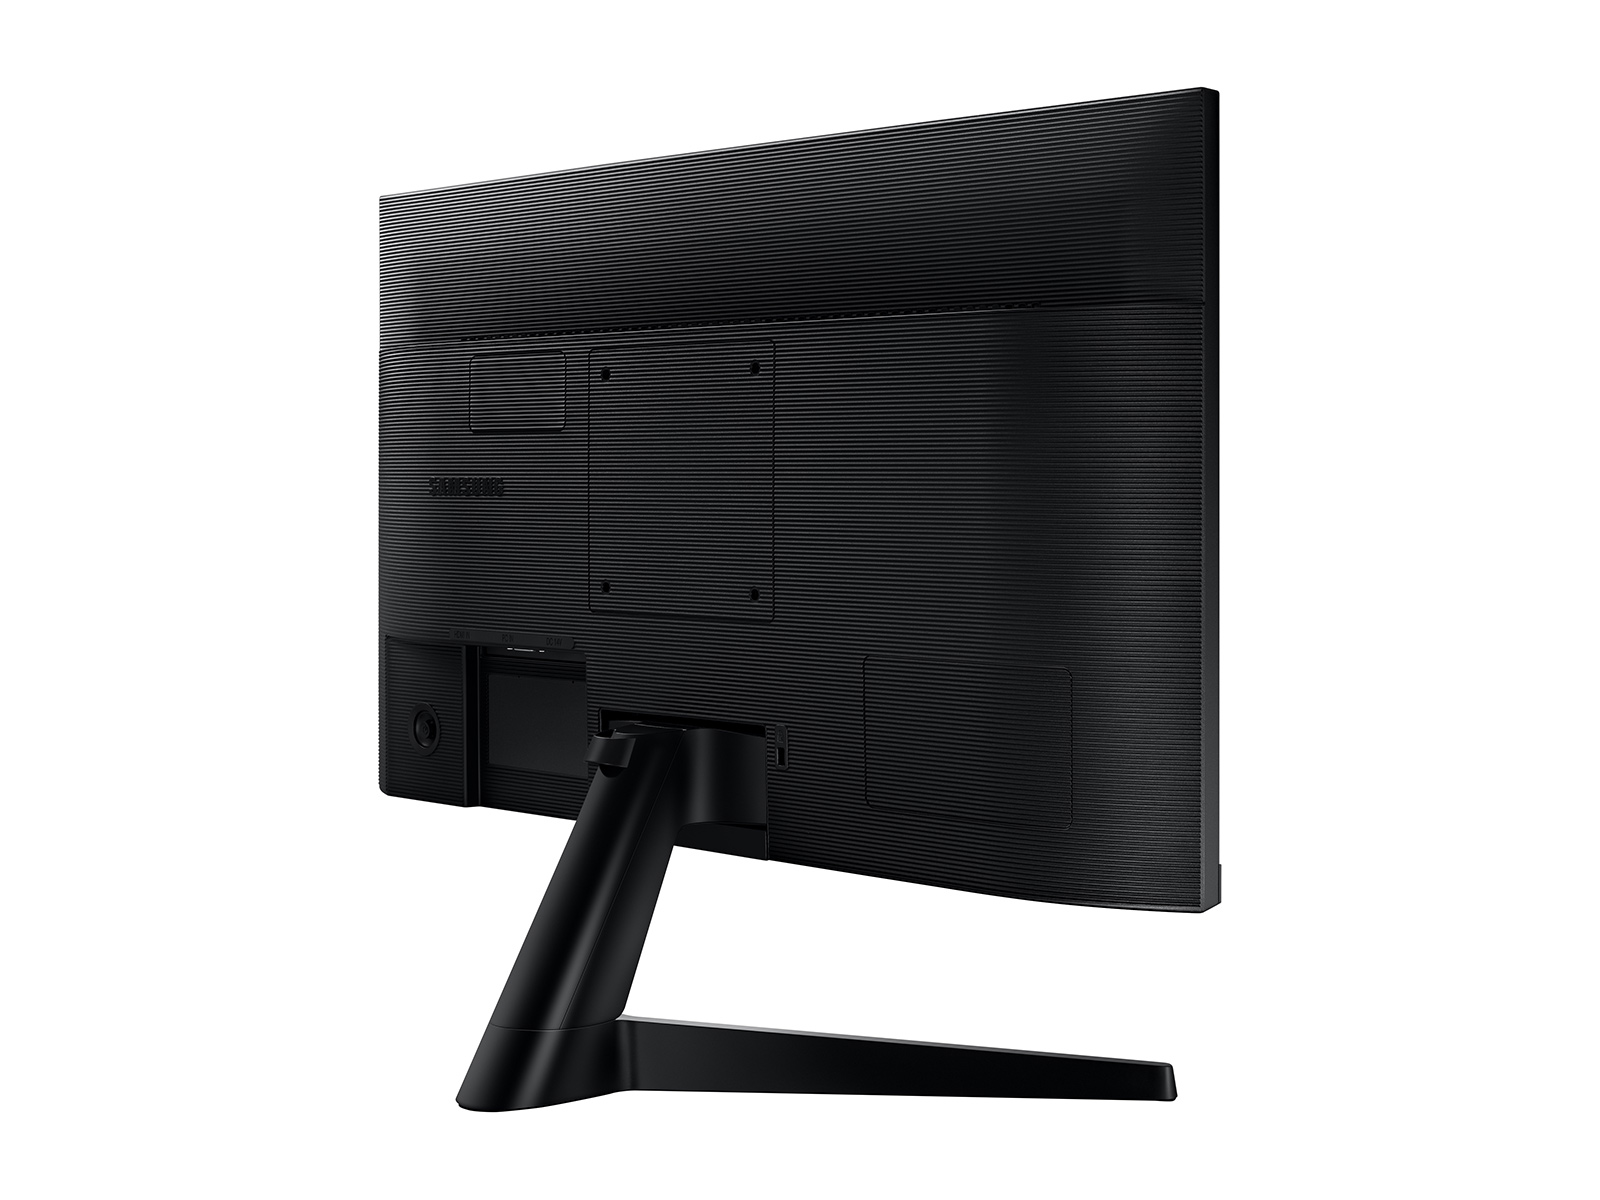 Samsung Monitor 22 Full HD, Panel VA, 60Hz (LS22A336NHLXZS)